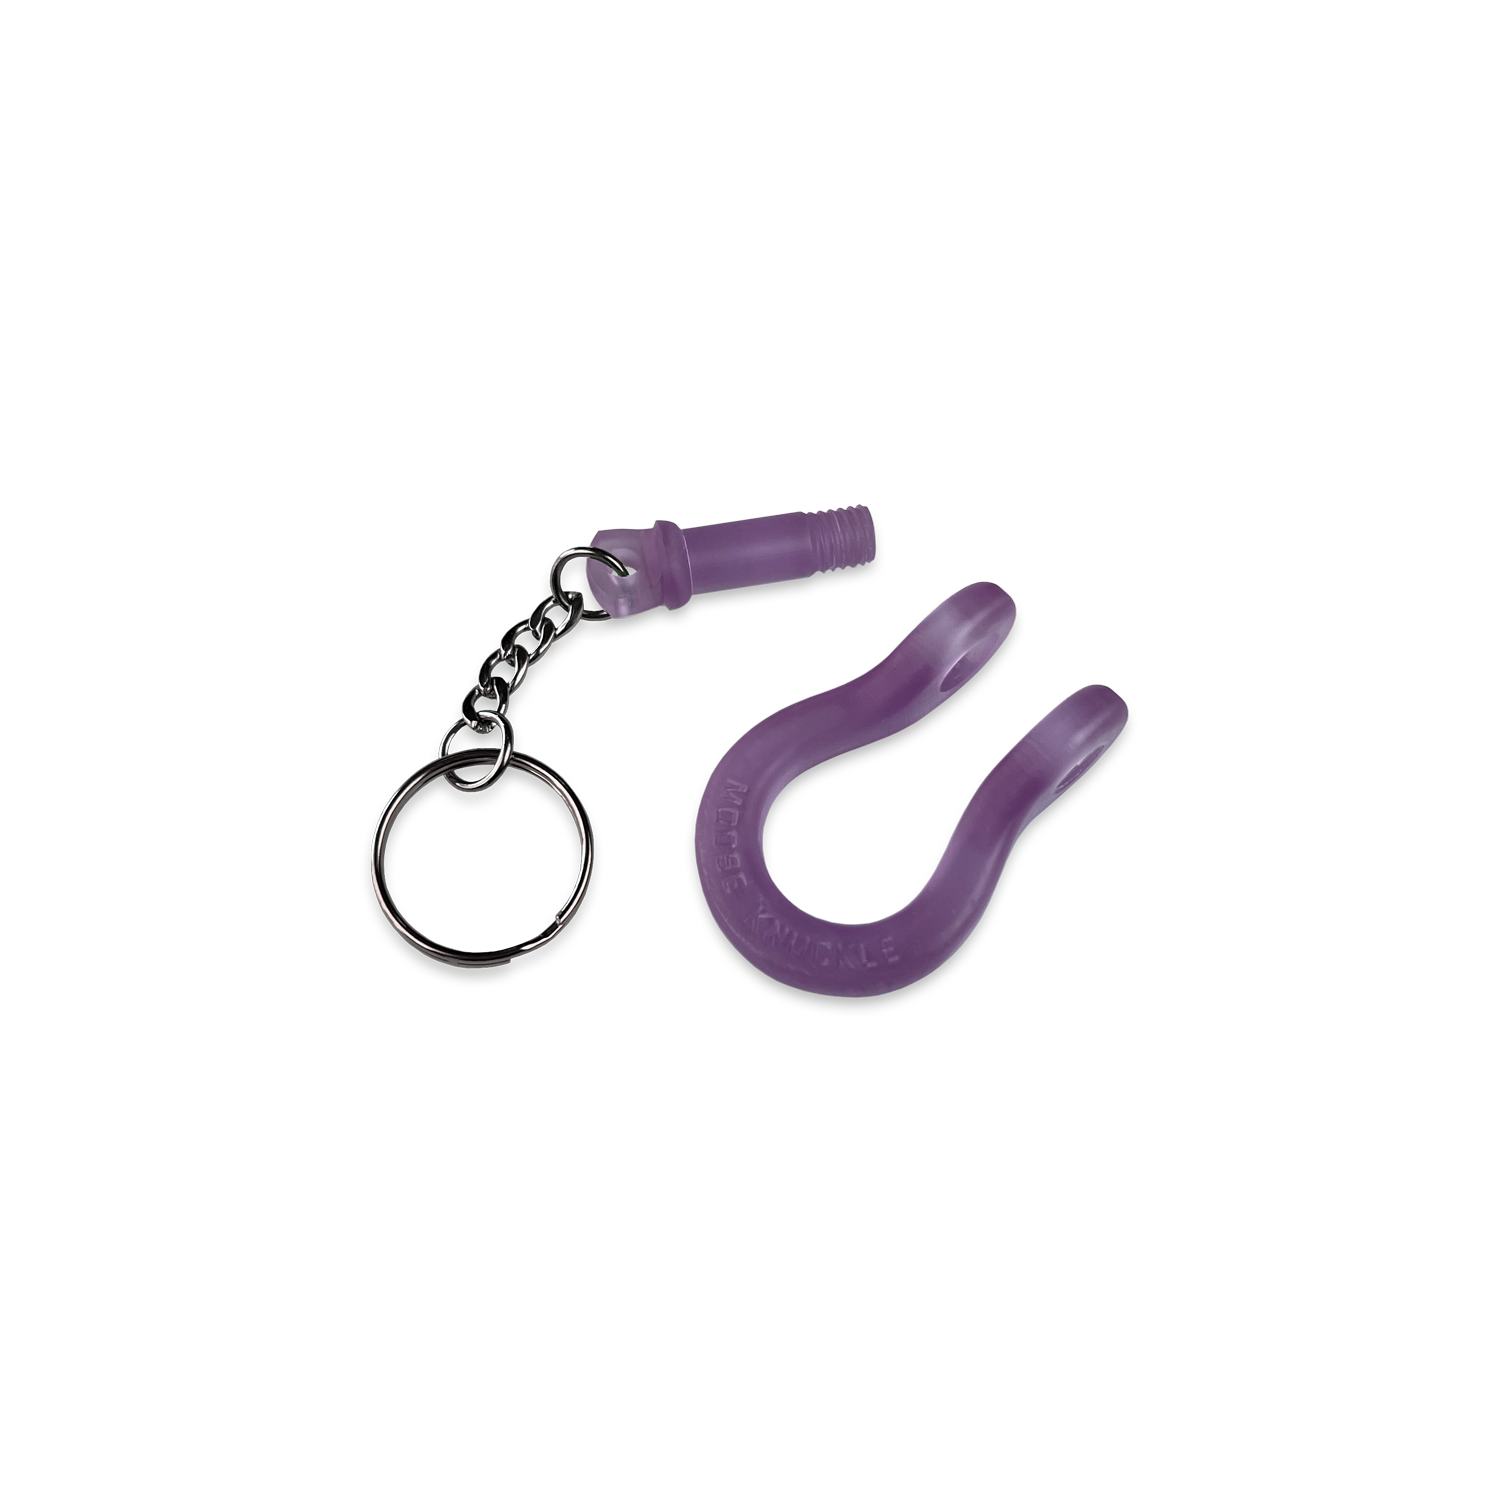 B'oh Shackle Screw Pin Key Chain in Purple Nurple Pin and Body